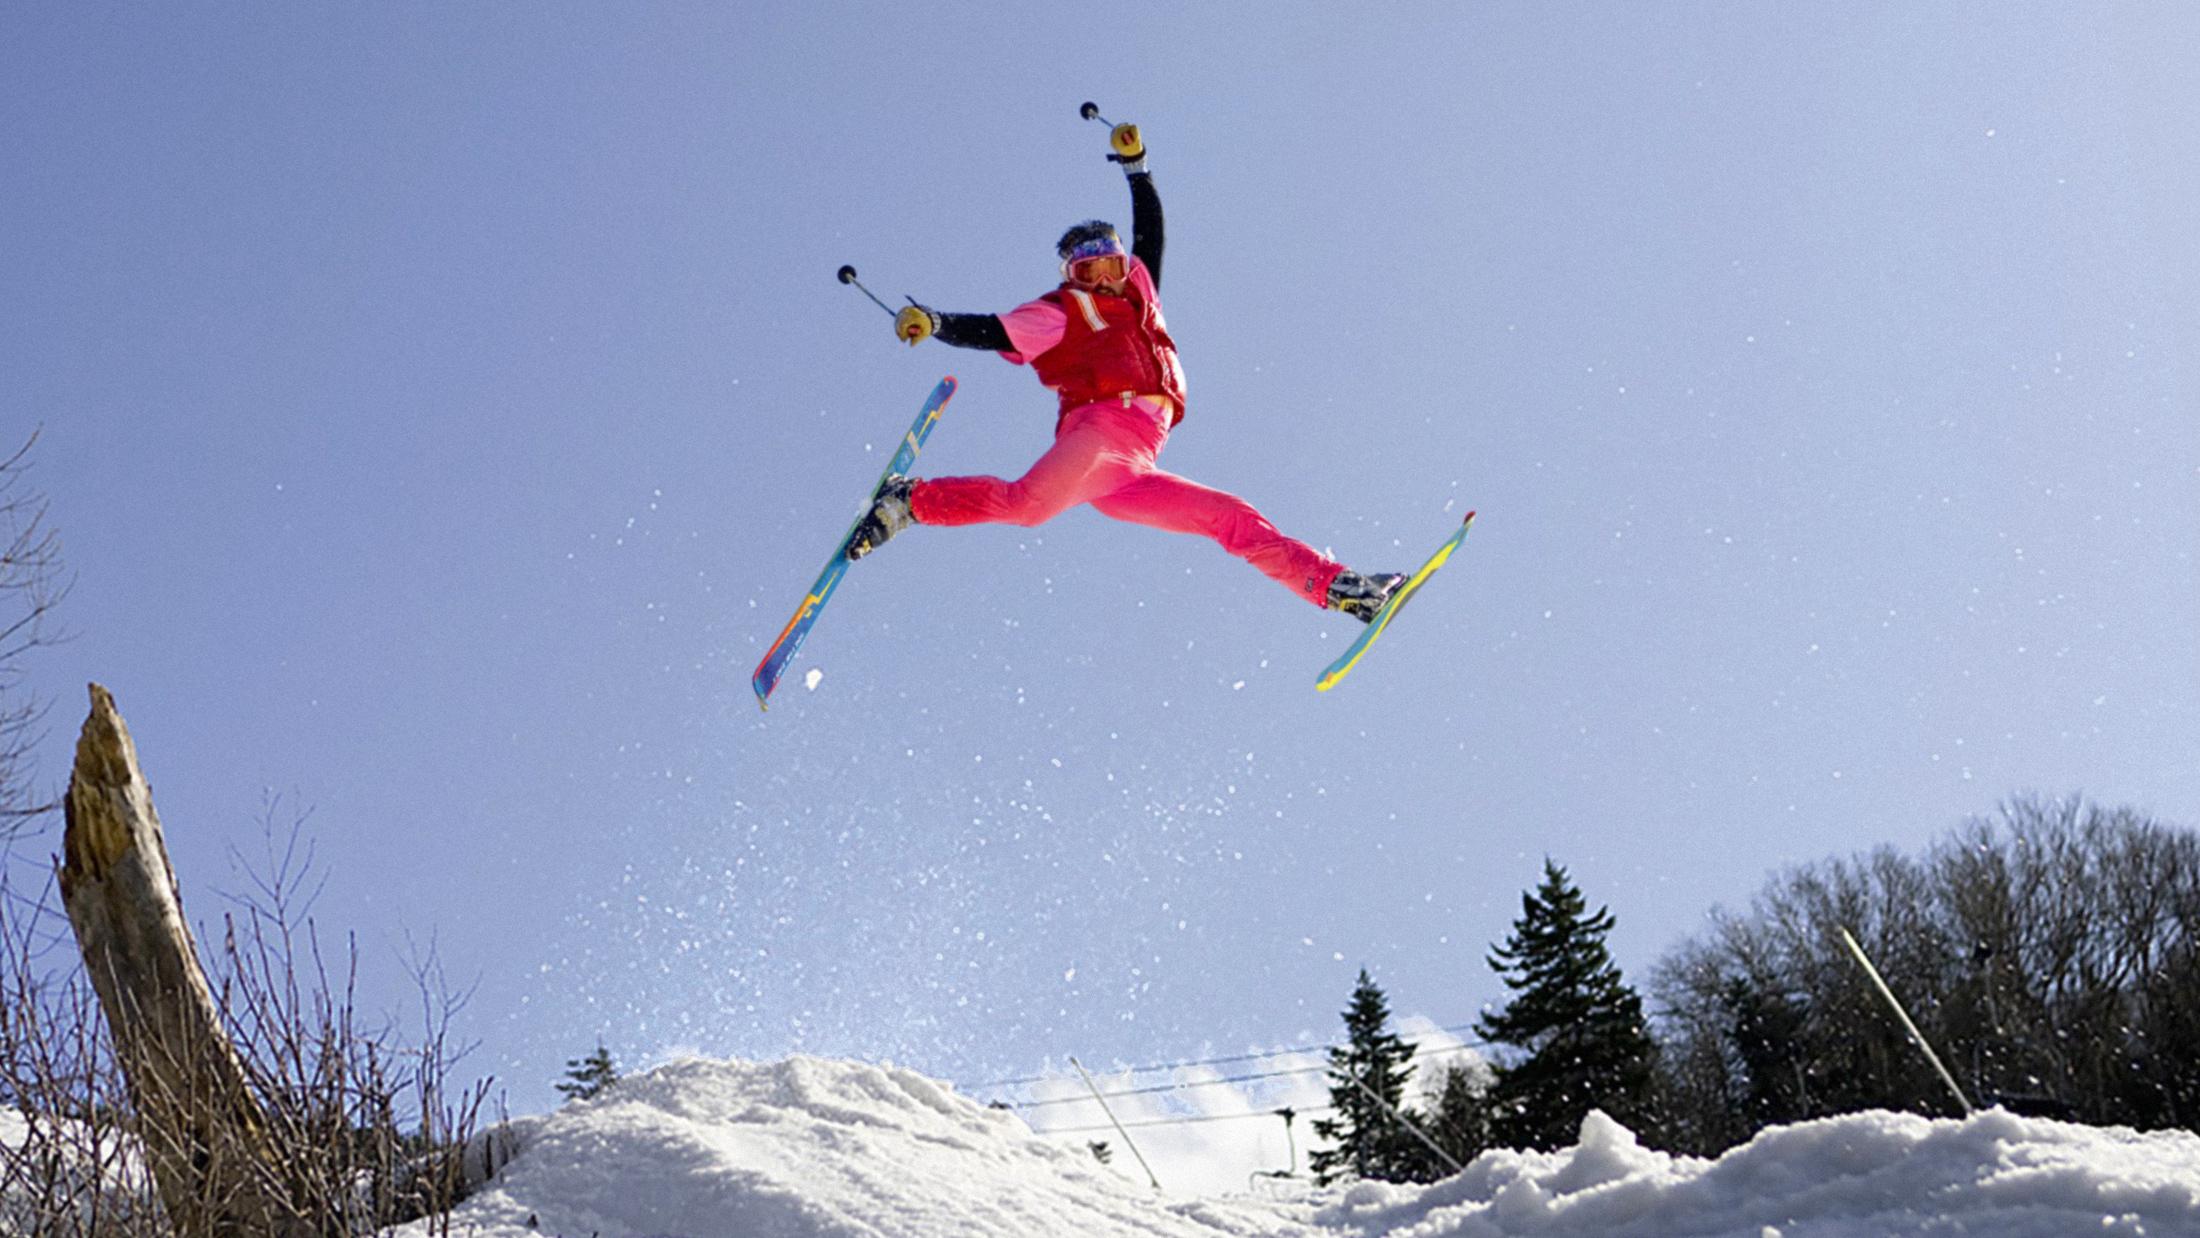 The Fastforward "MONOCOQUE" Ski The East x J Collab Limited Edition Ski Shredding Image